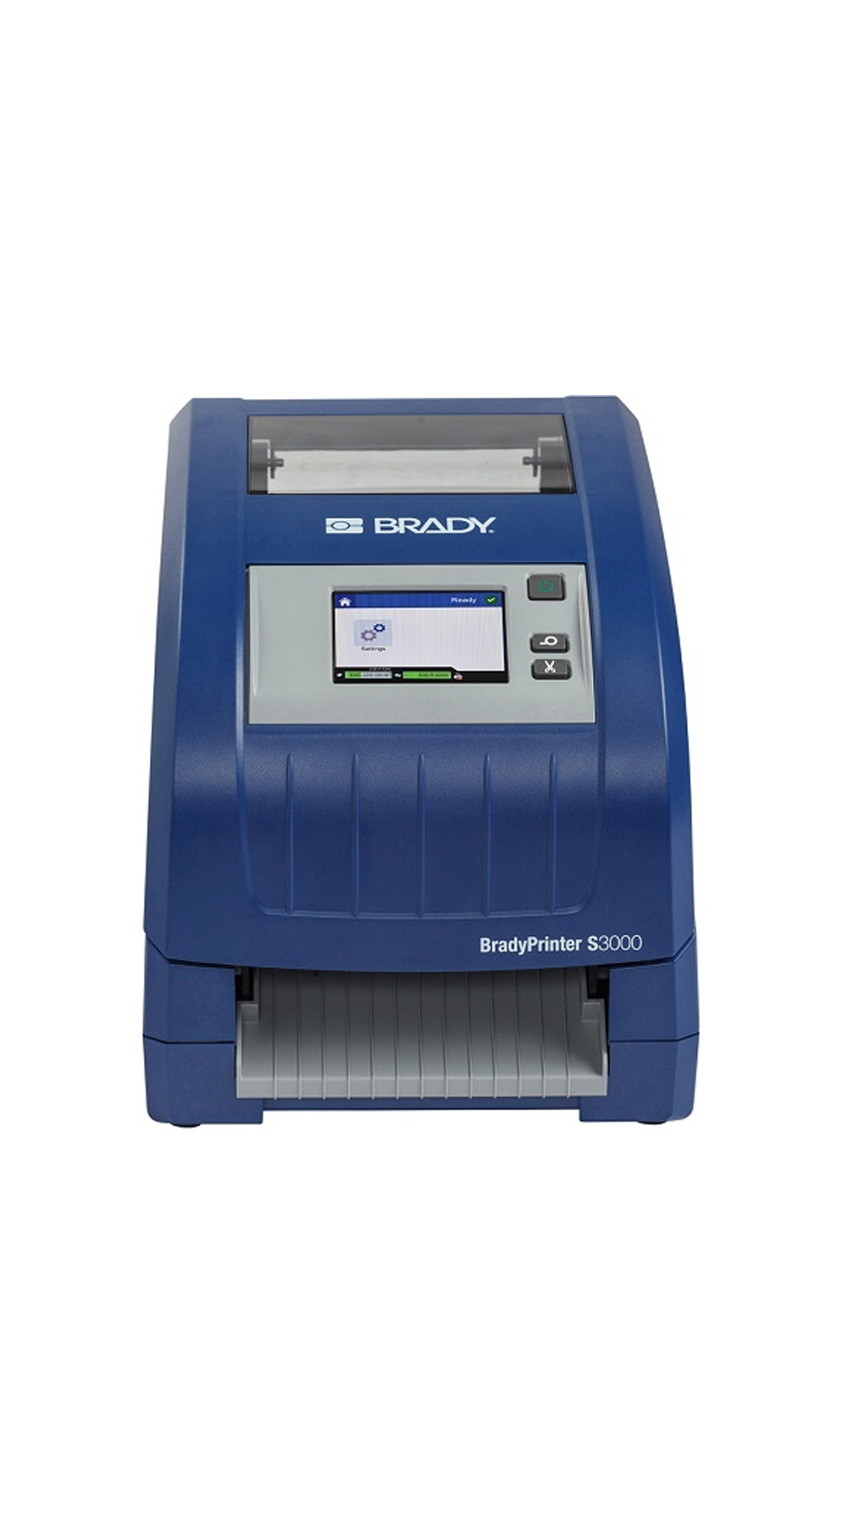 Eitikettendrucker Brady S3000